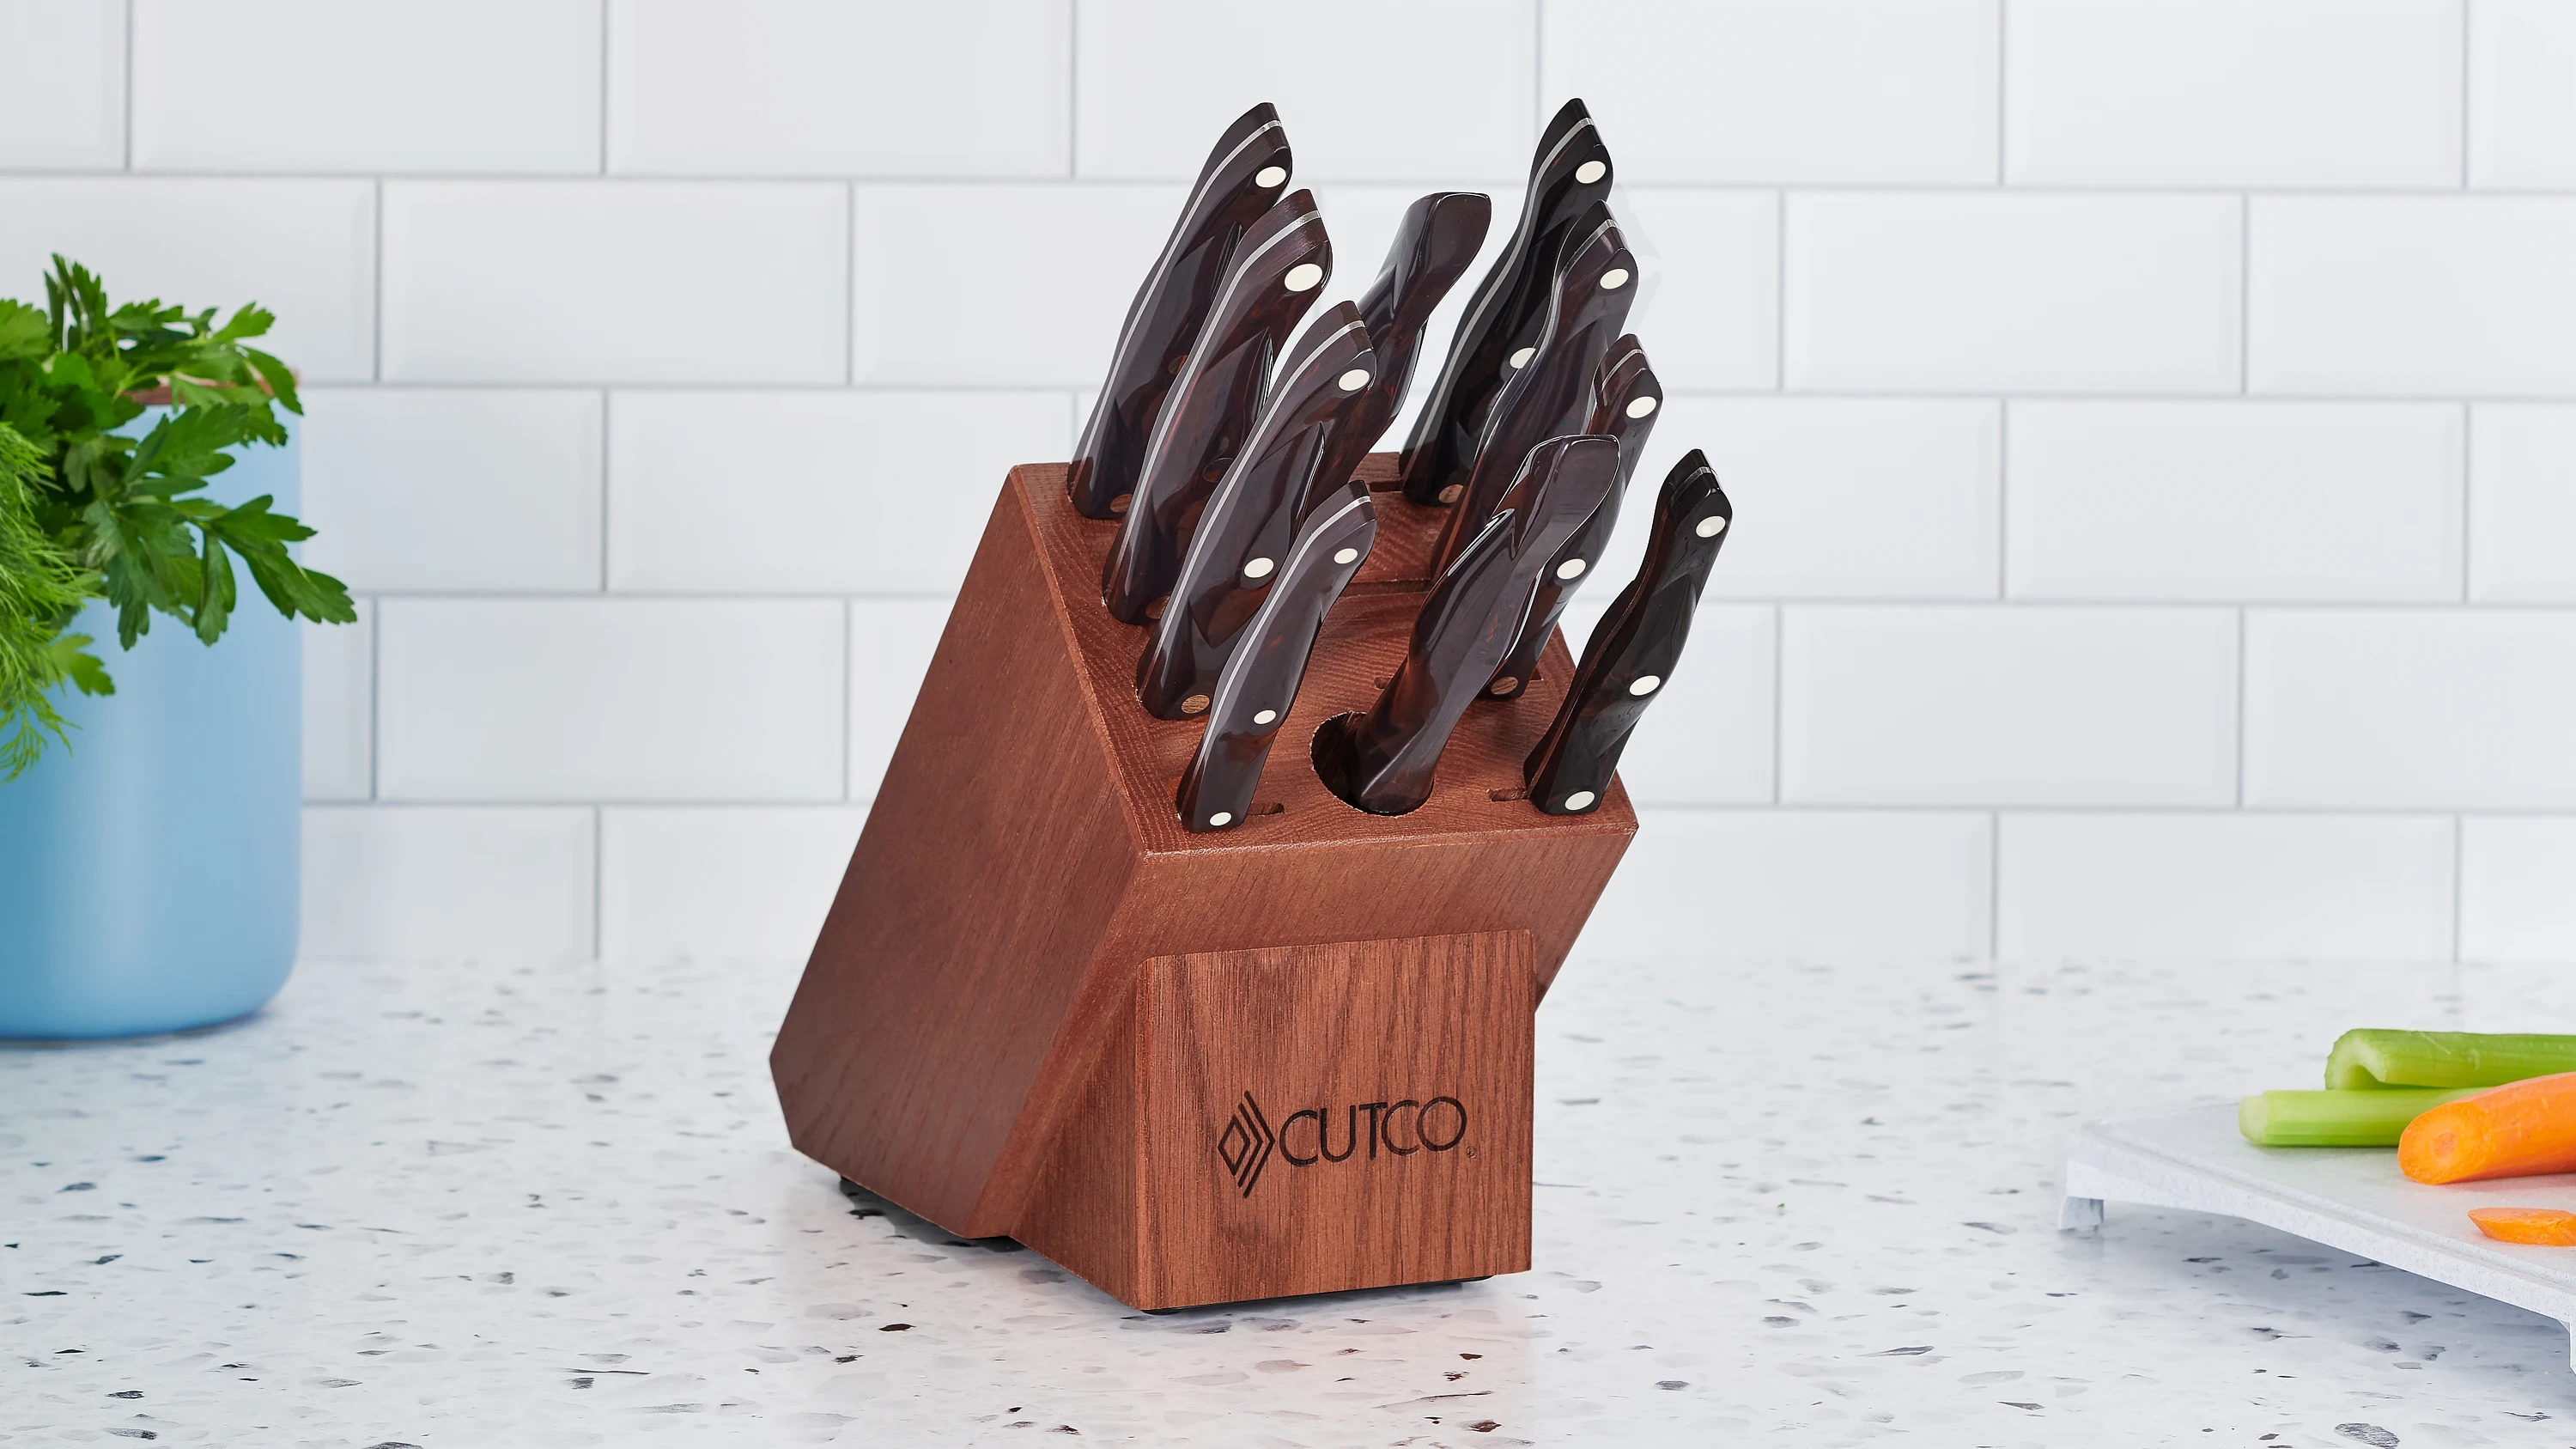 Cutco French Chef Homemaker + 8 Classic Knife Set with Oak Block